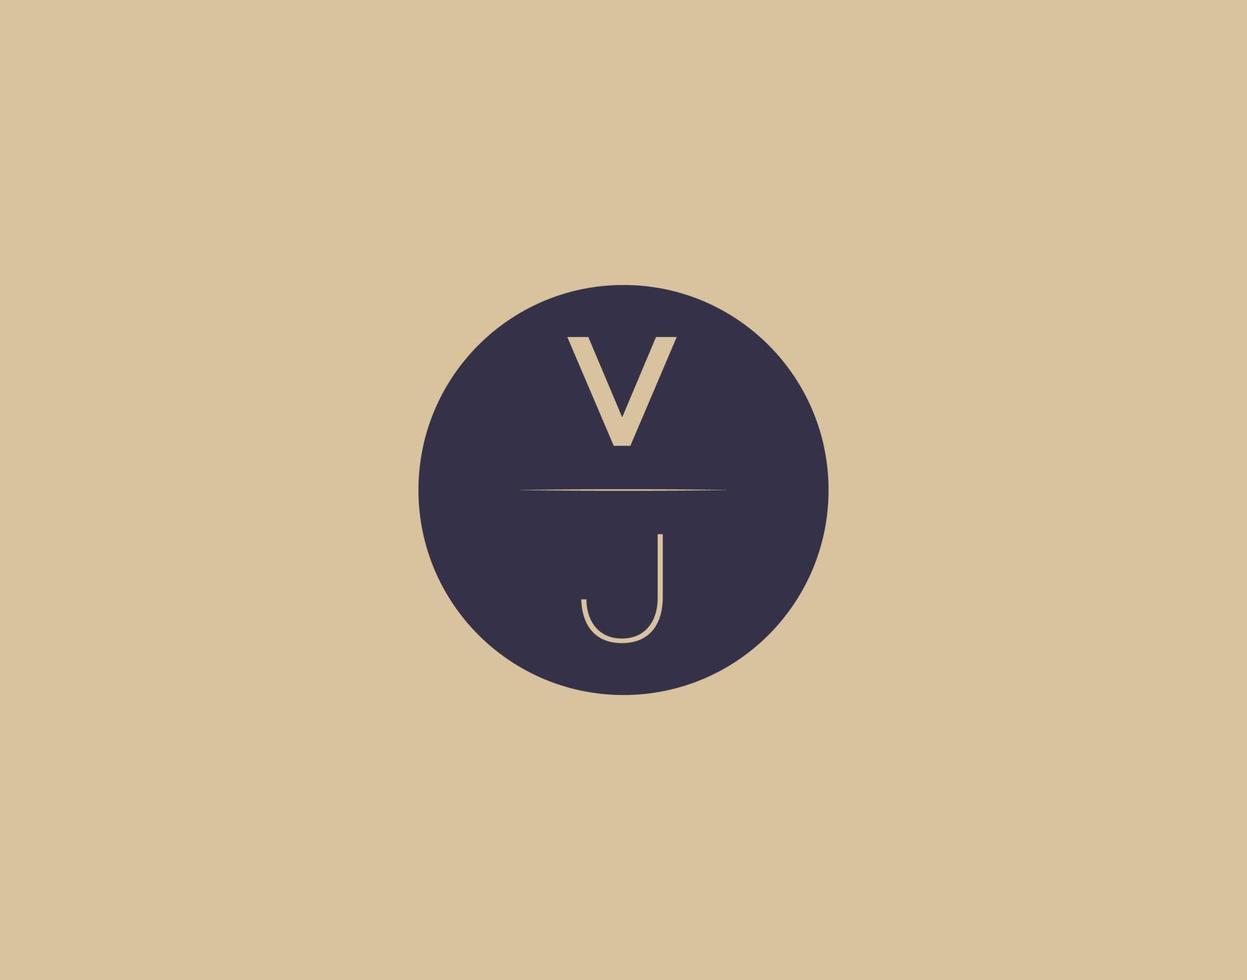 VJ letter modern elegant logo design vector images